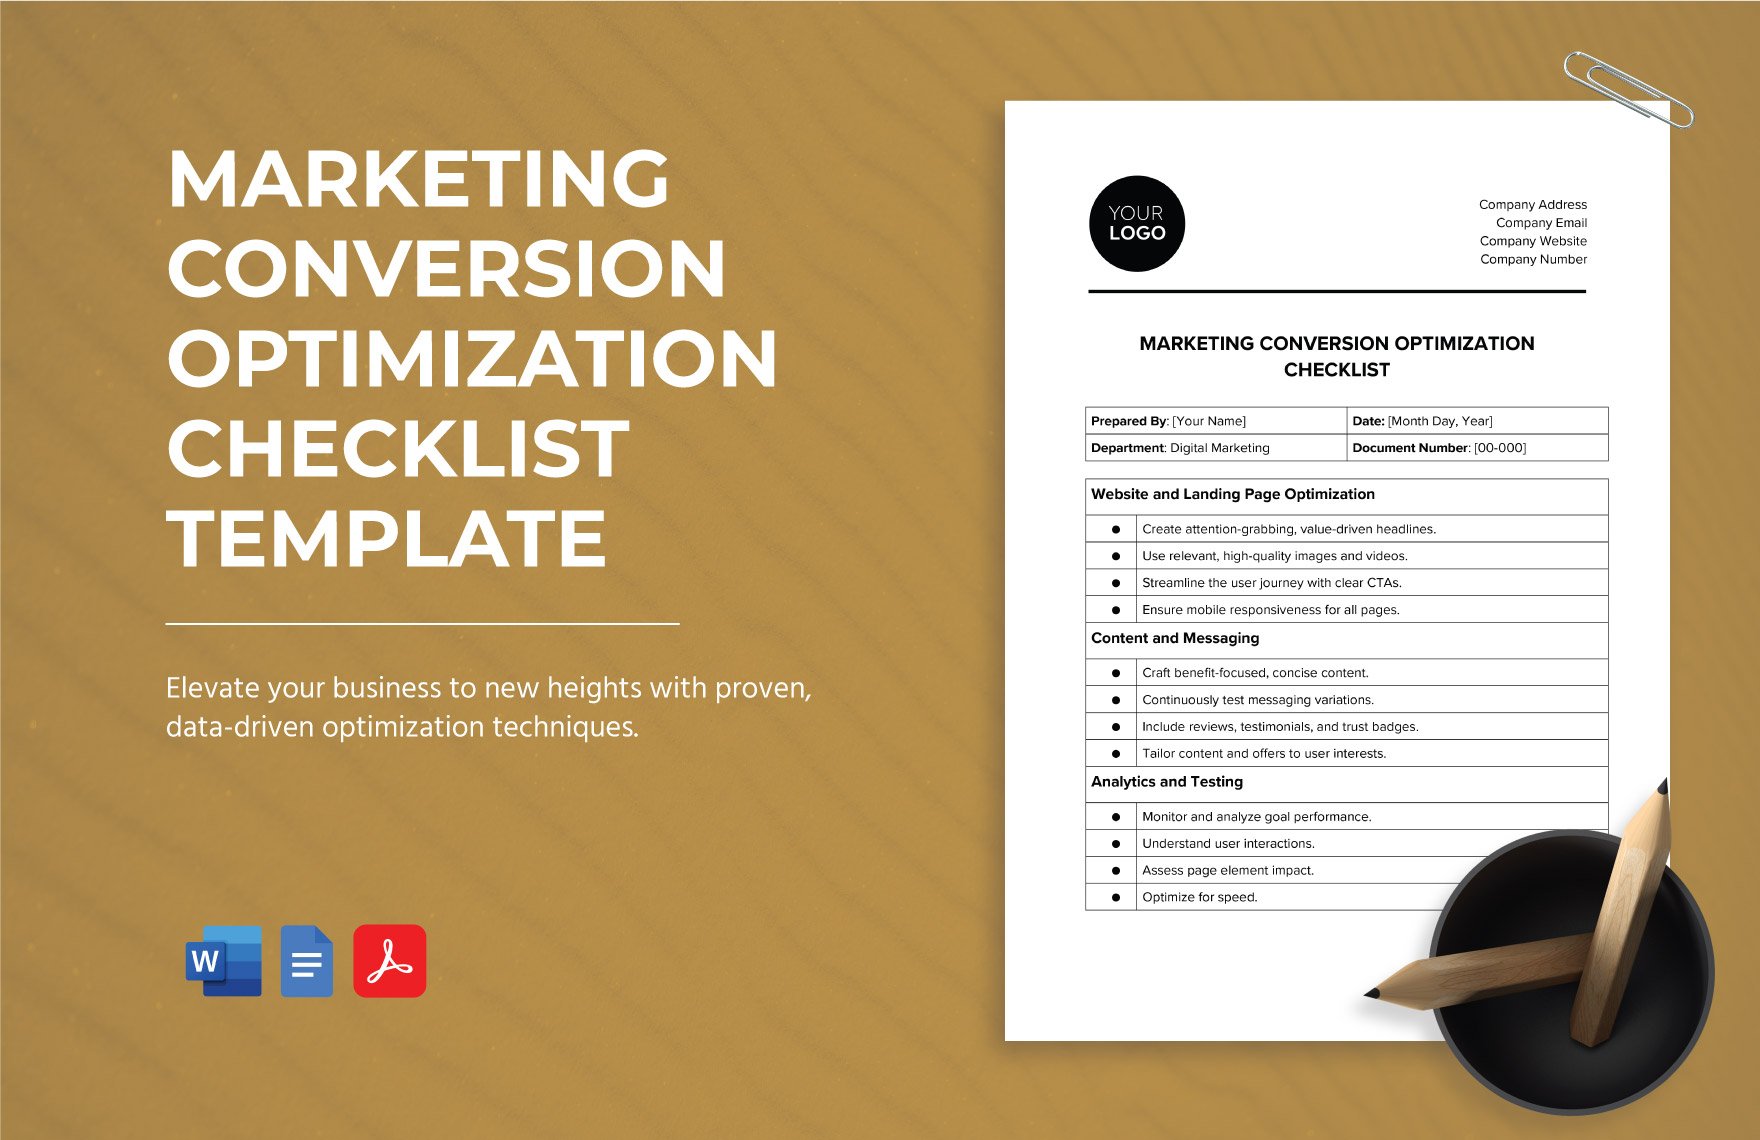 Marketing Conversion Optimization Checklist Template in Word, Google Docs, PDF